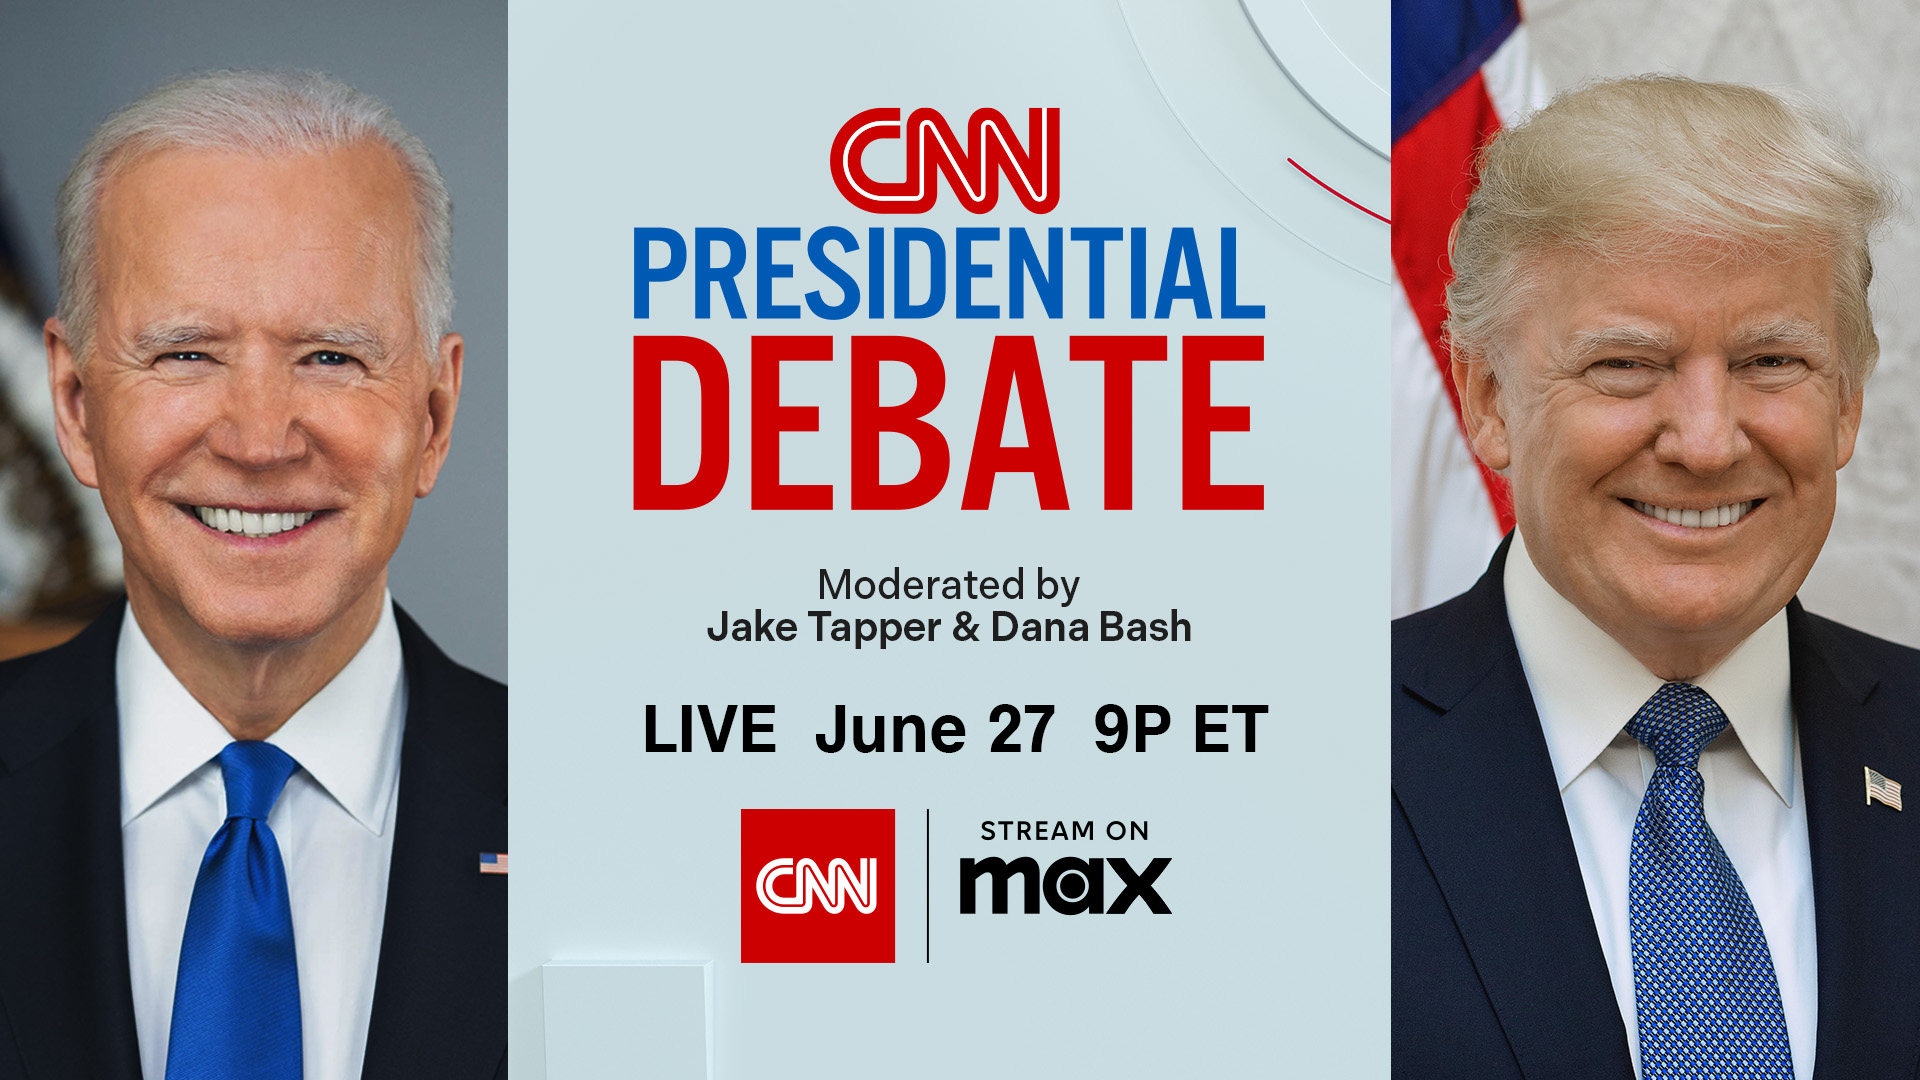 Listen Live to the CNN Presidential Debate on SiriusXM